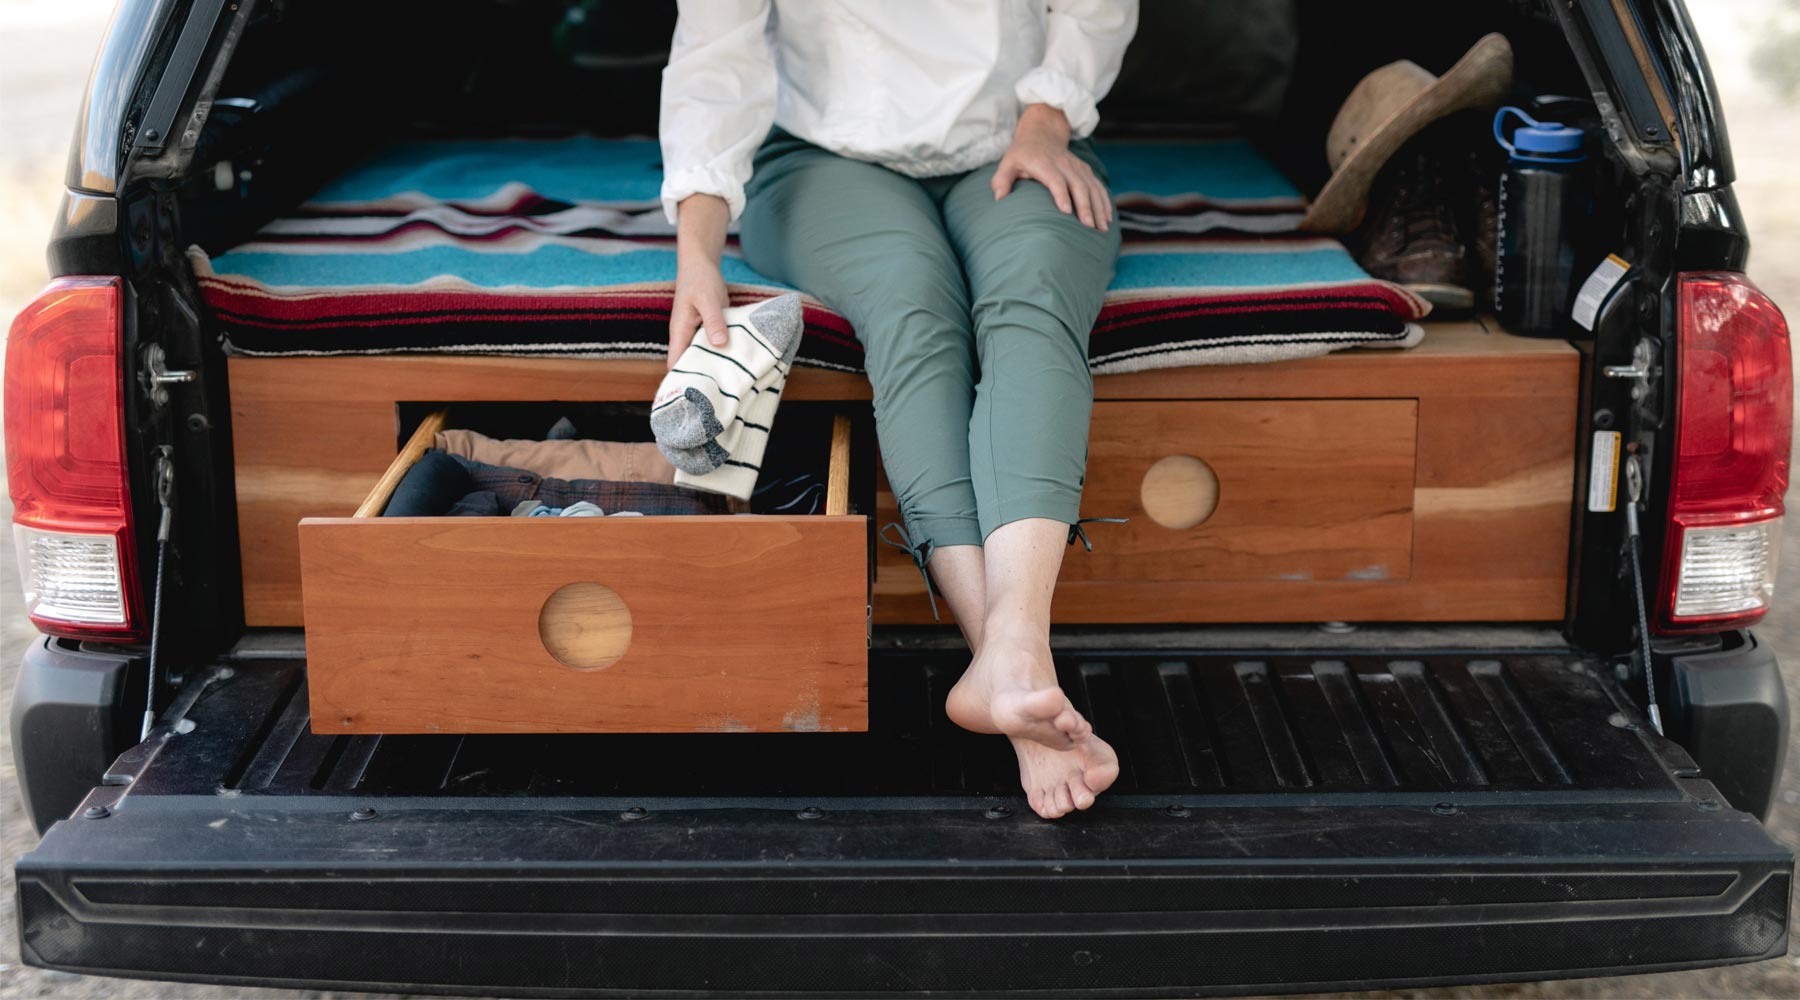 Camper sitting in back of converted truck camper putting Cloudline socks into under bed drawer.